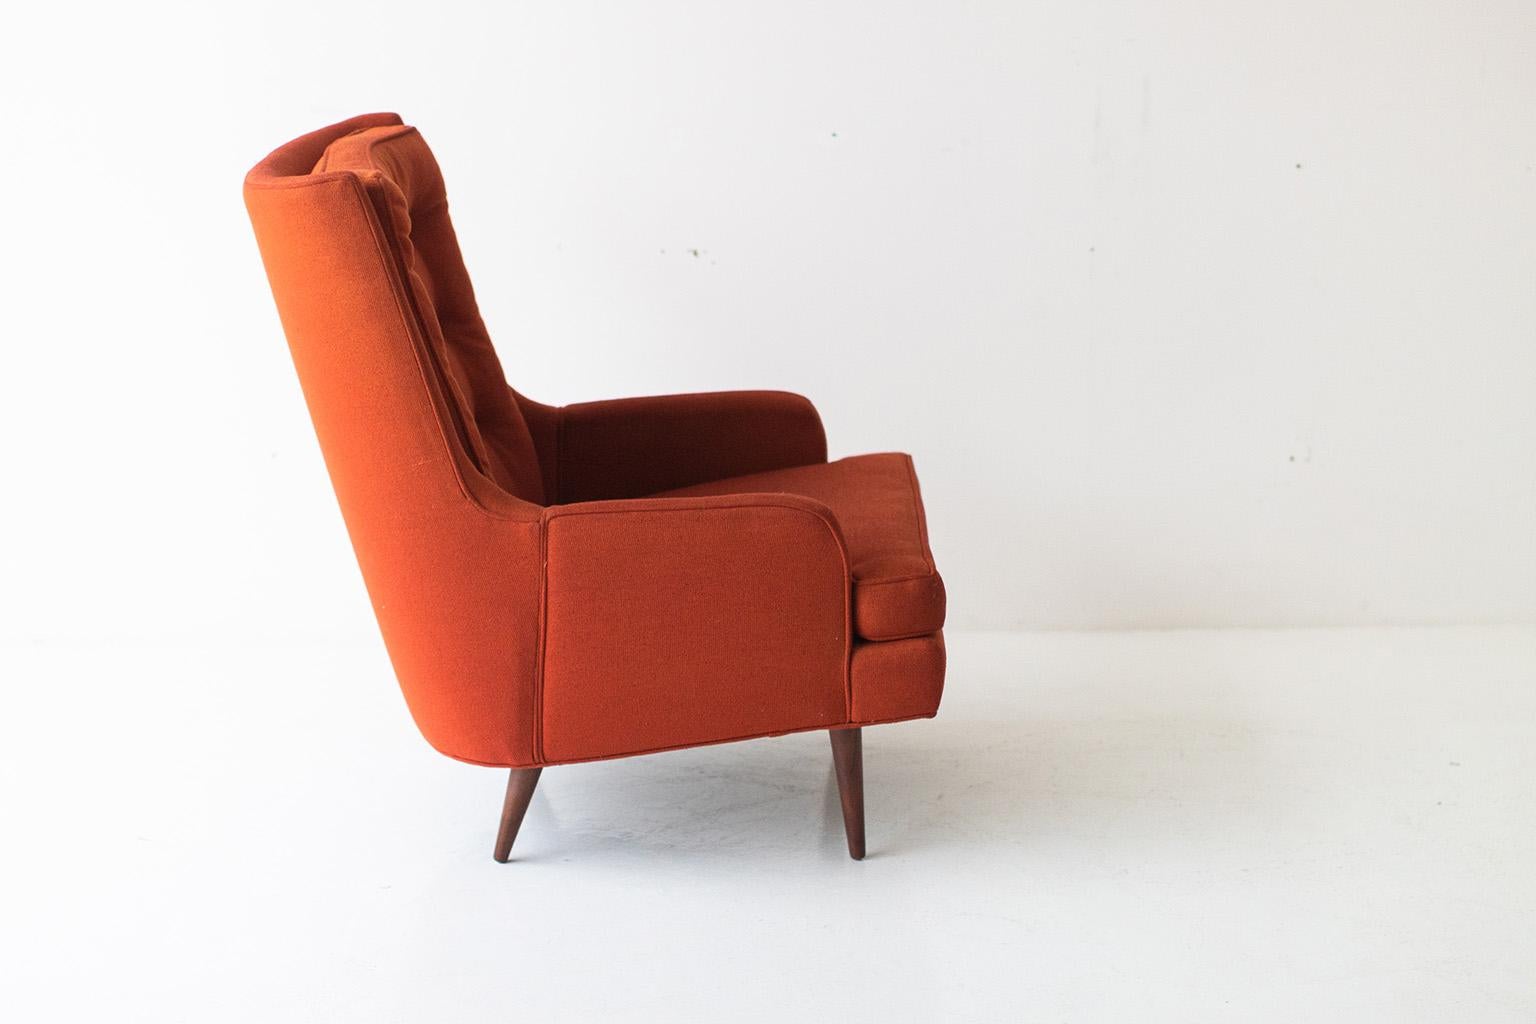 Fabric Milo Baughman Lounge Chair for James Inc